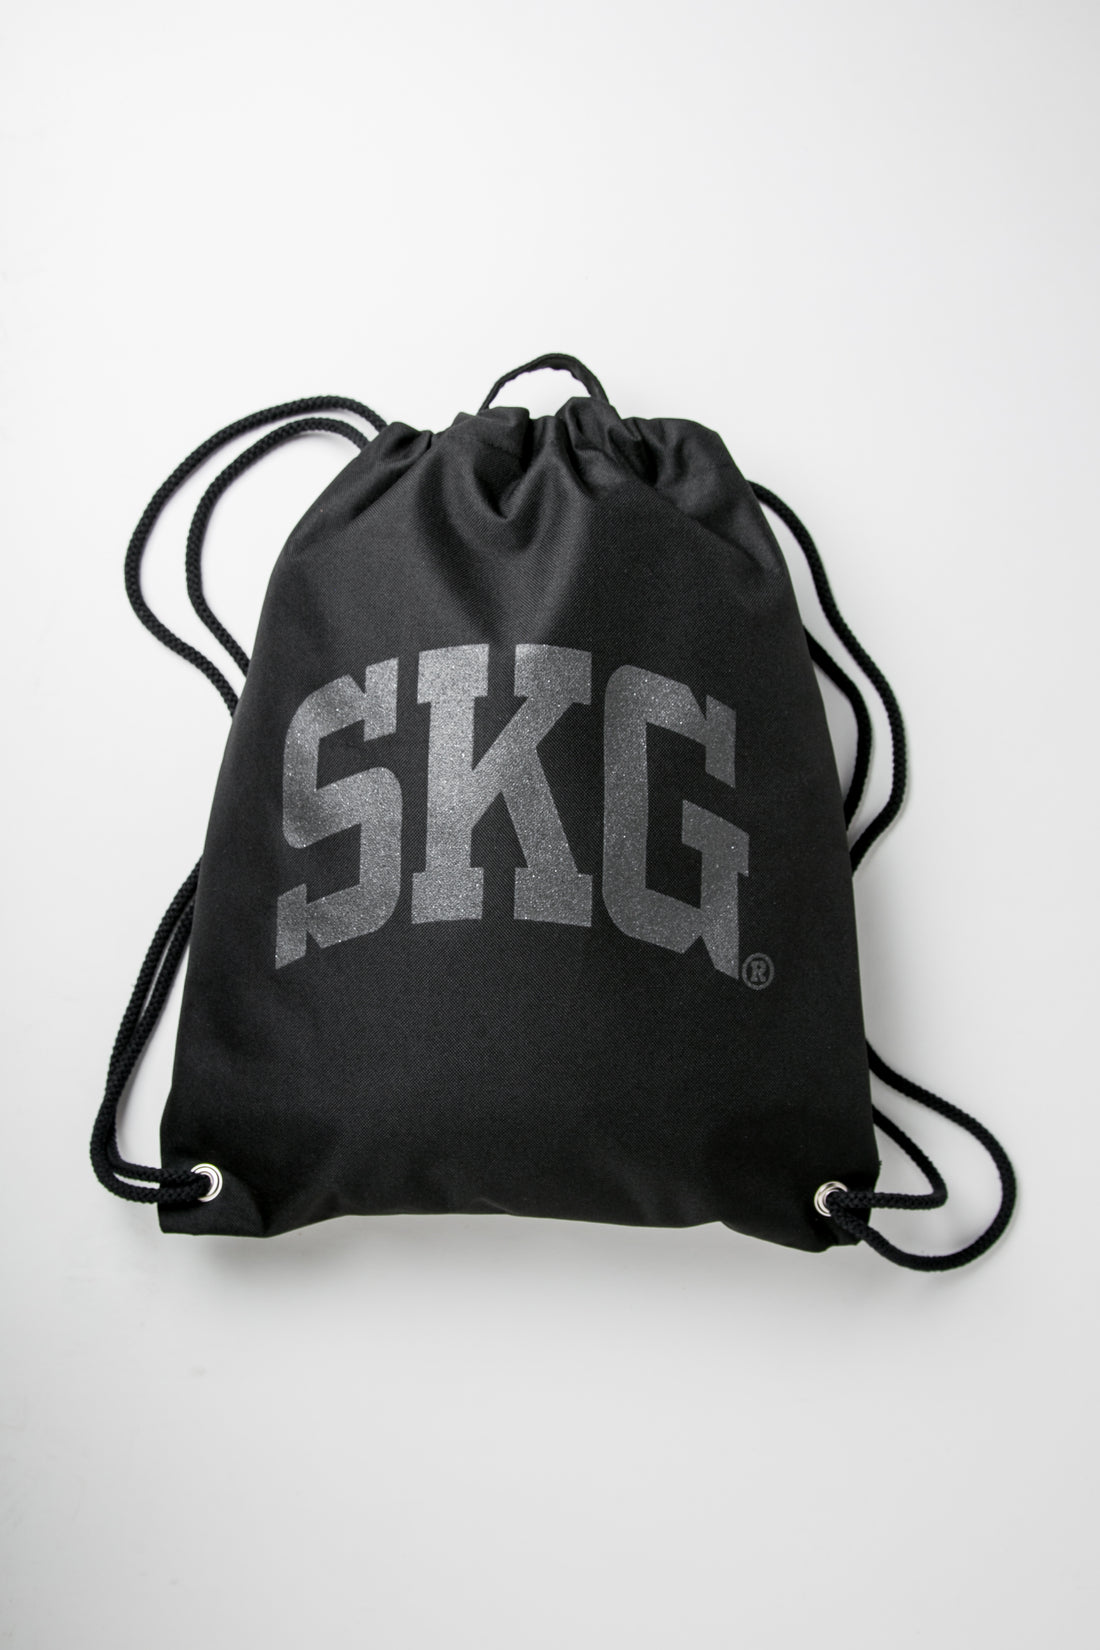 SKG rucksack